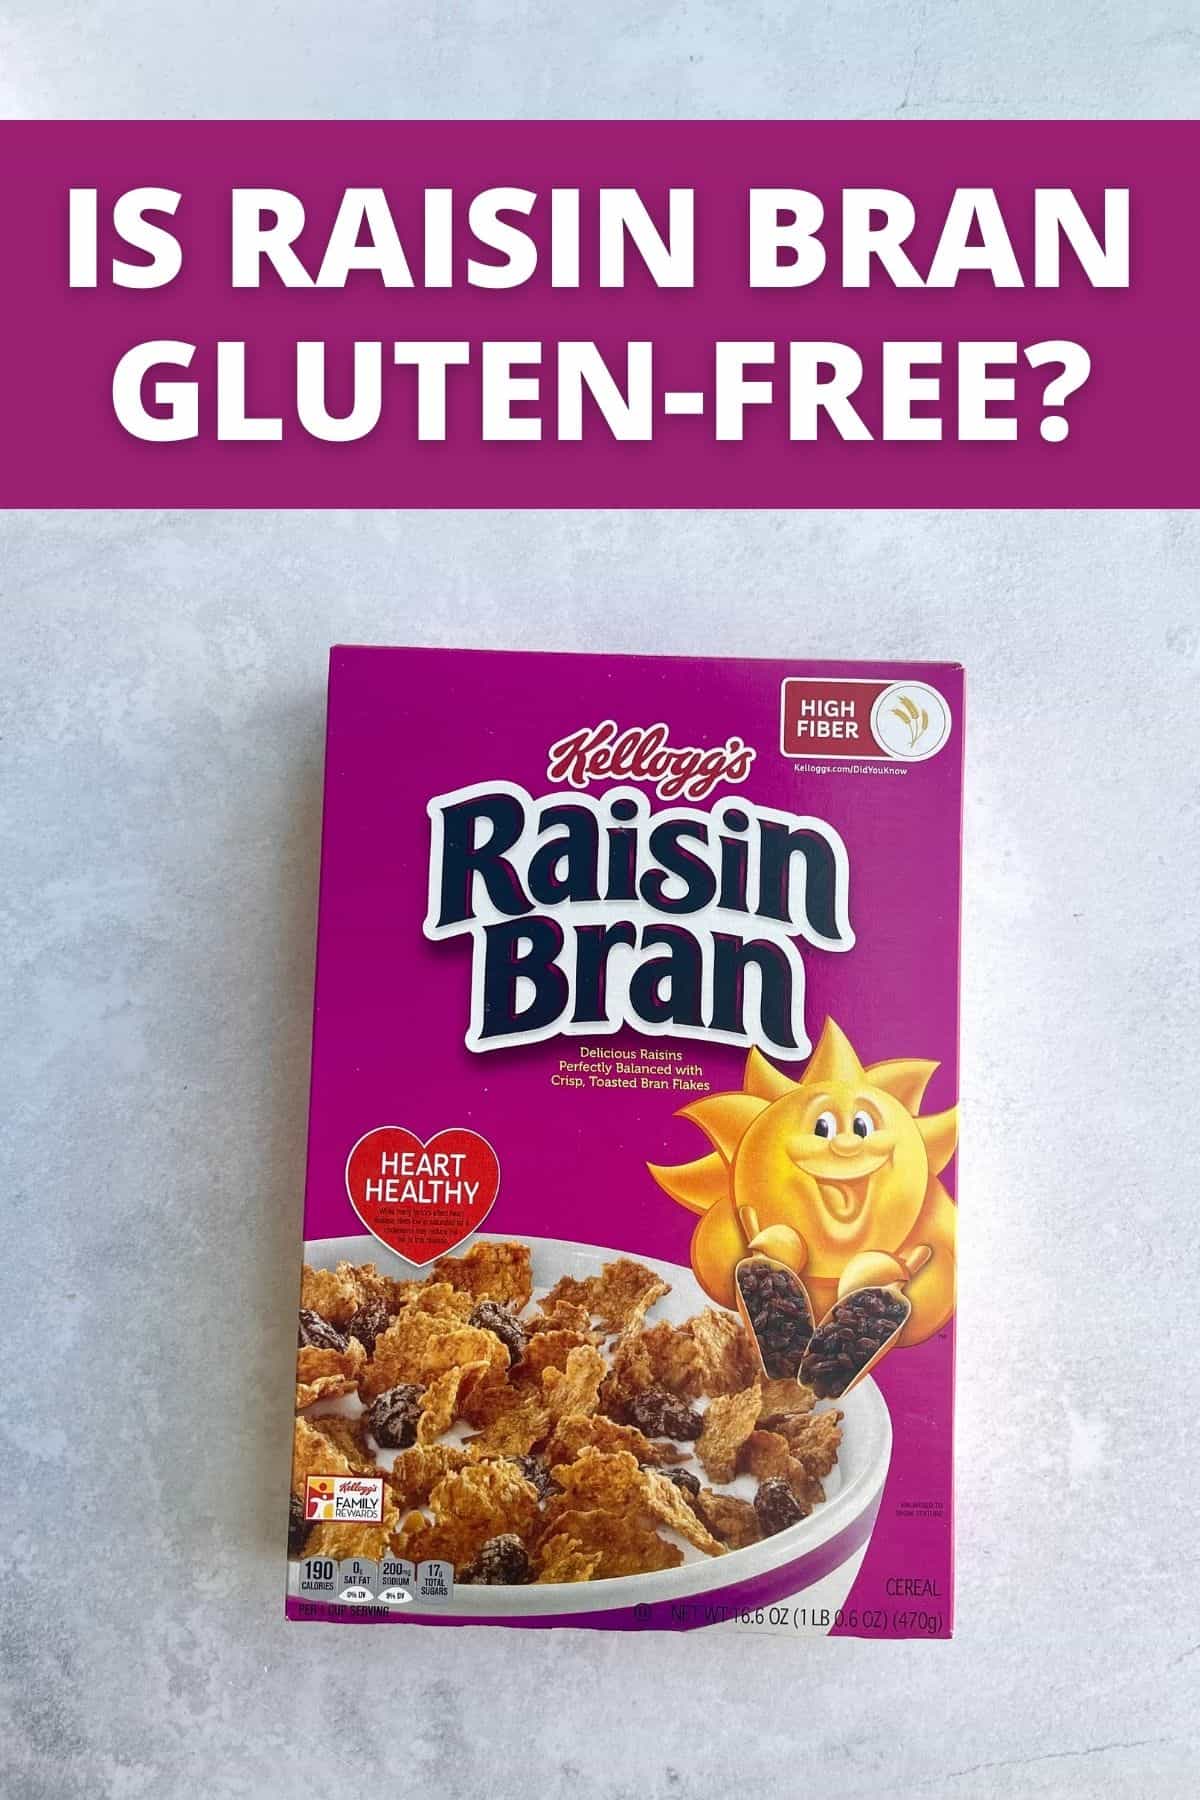 A box of Raisin Bran and text that reads, "Is Raisin Bran Gluten-Free?"